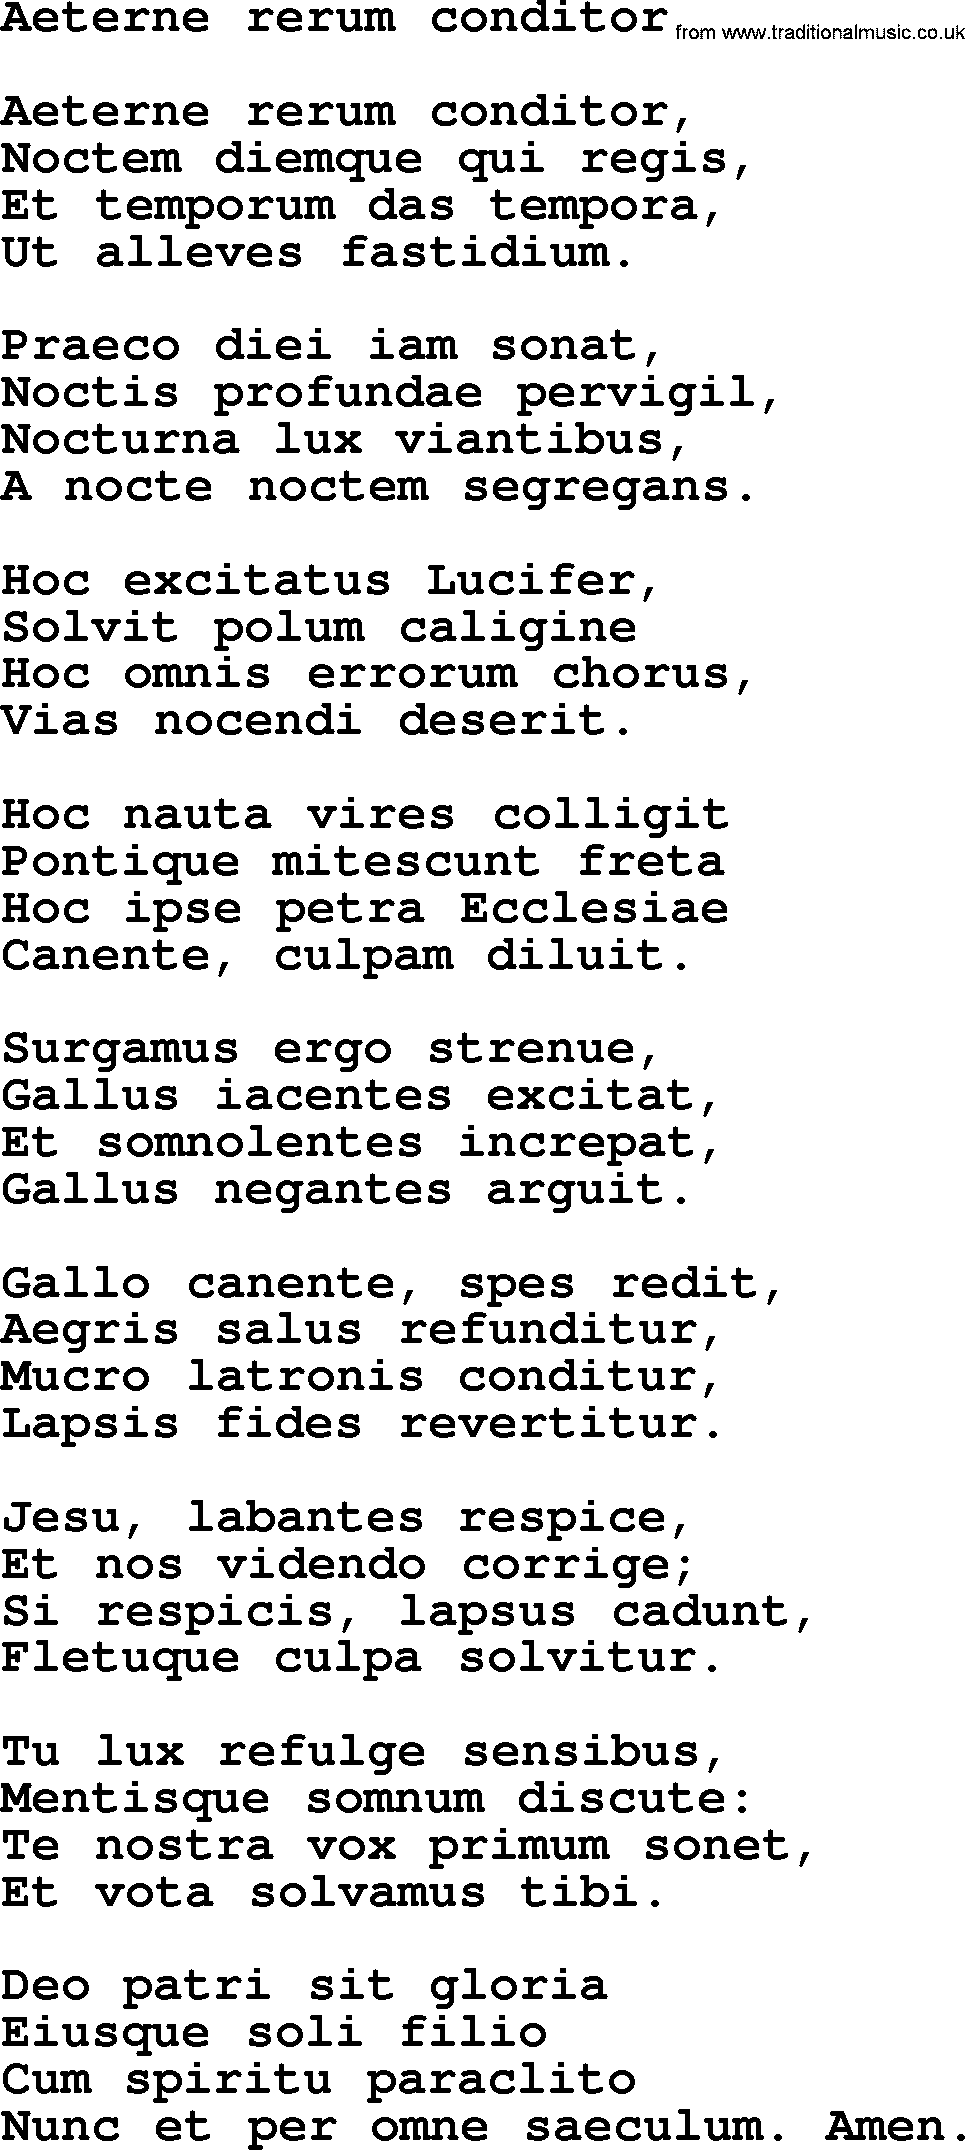 Catholic Hymn: Aeterne Rerum Conditor lyrics with PDF